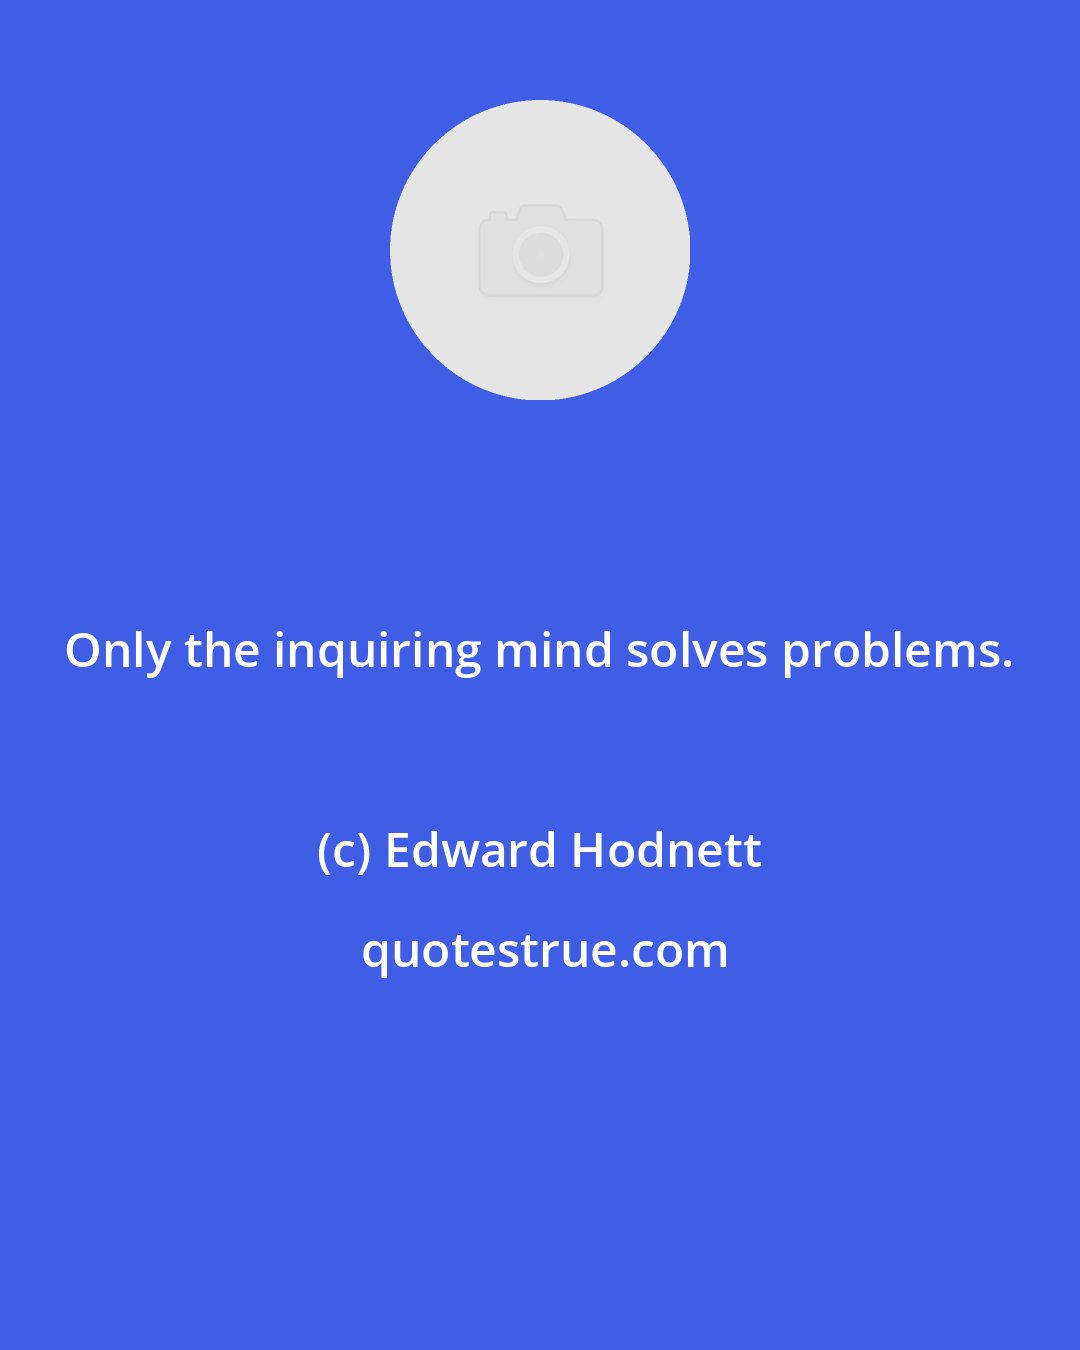 Edward Hodnett: Only the inquiring mind solves problems.